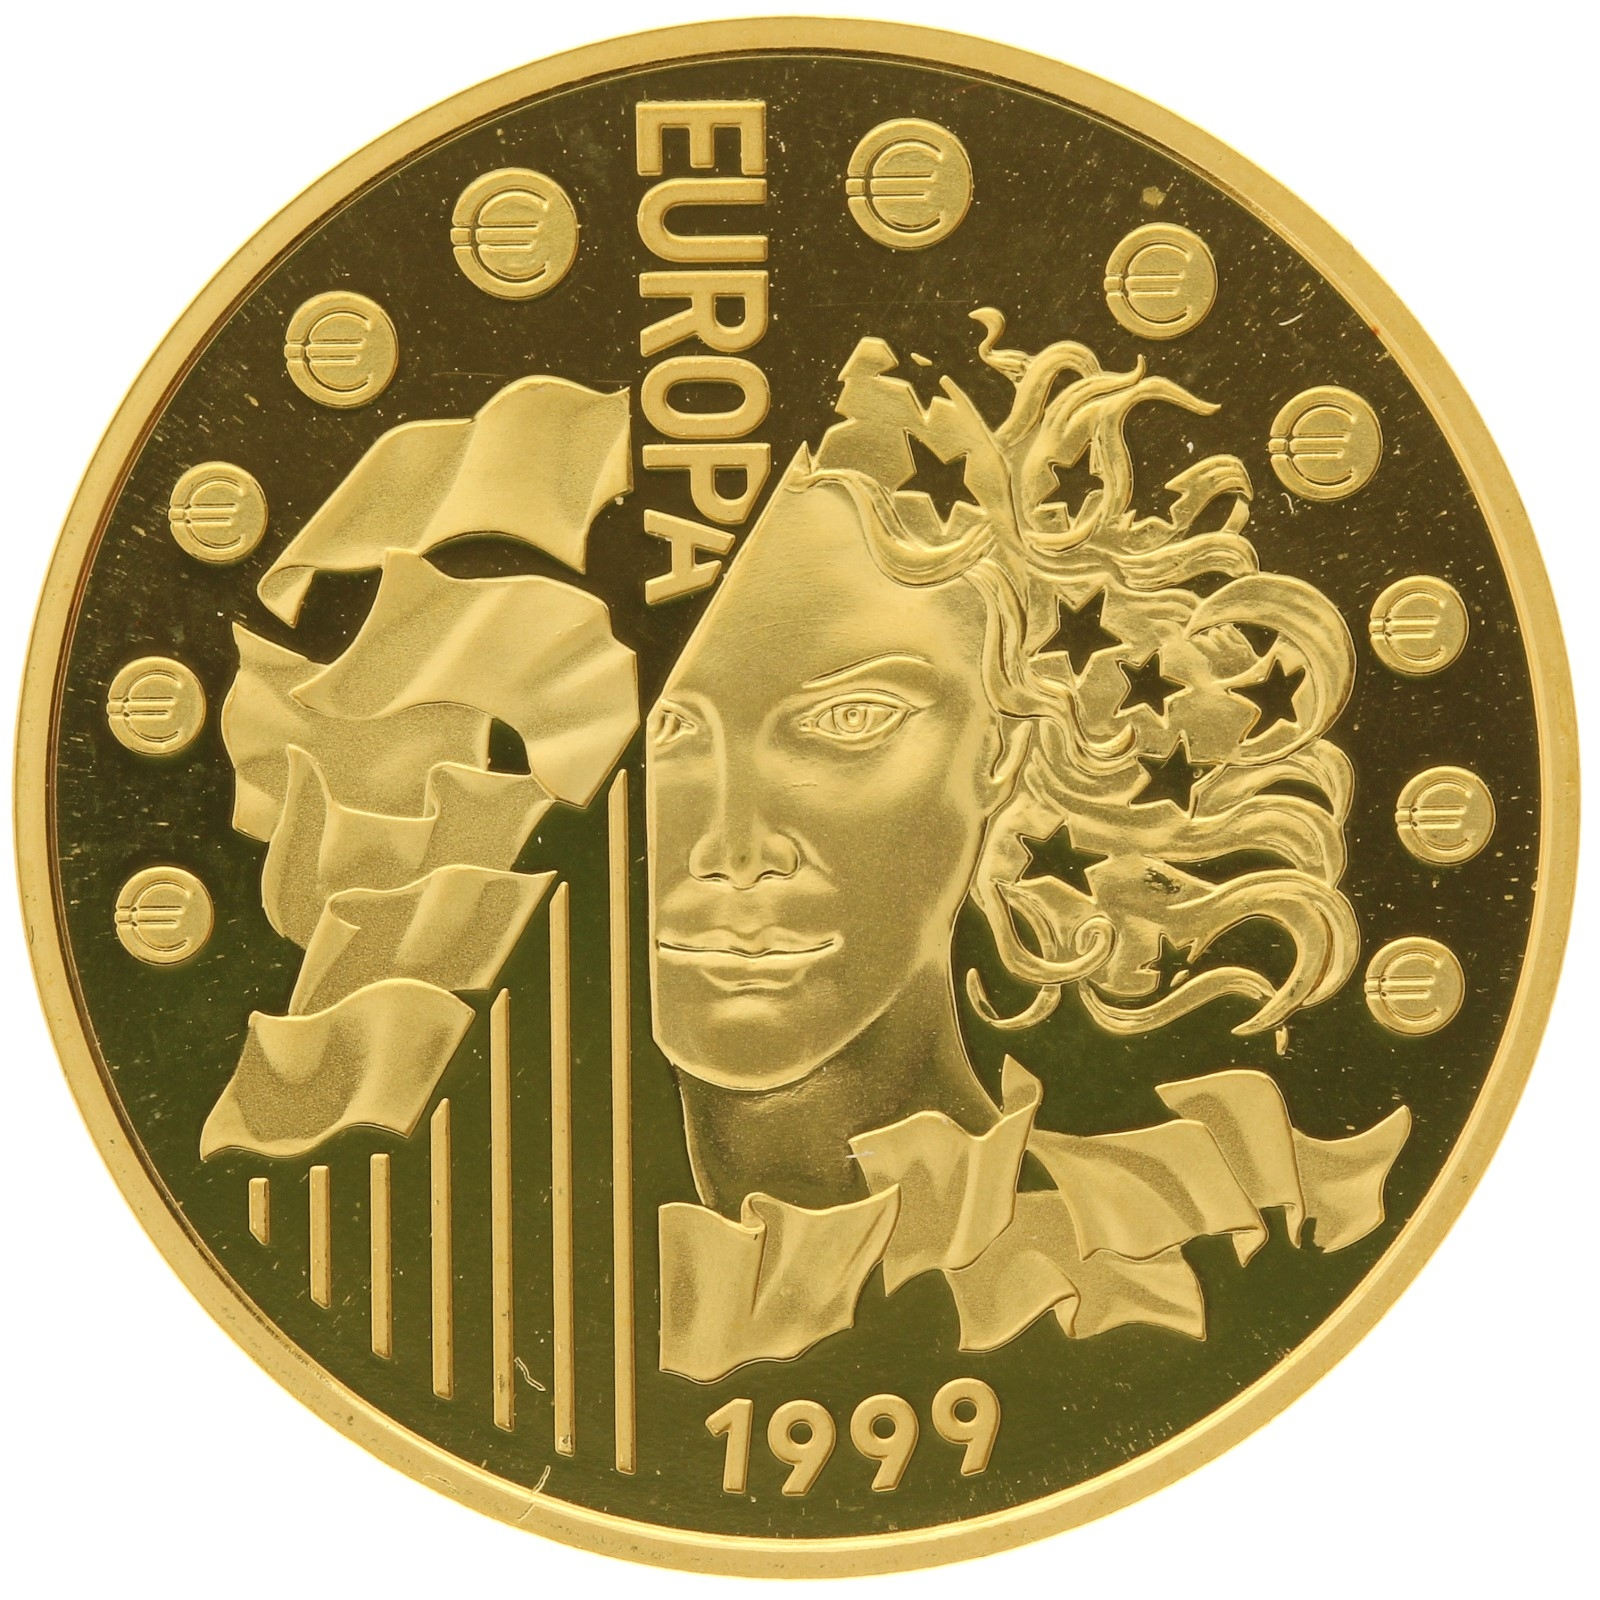 France - 65.5957 Francs - 1999 - Europa - 1/4oz